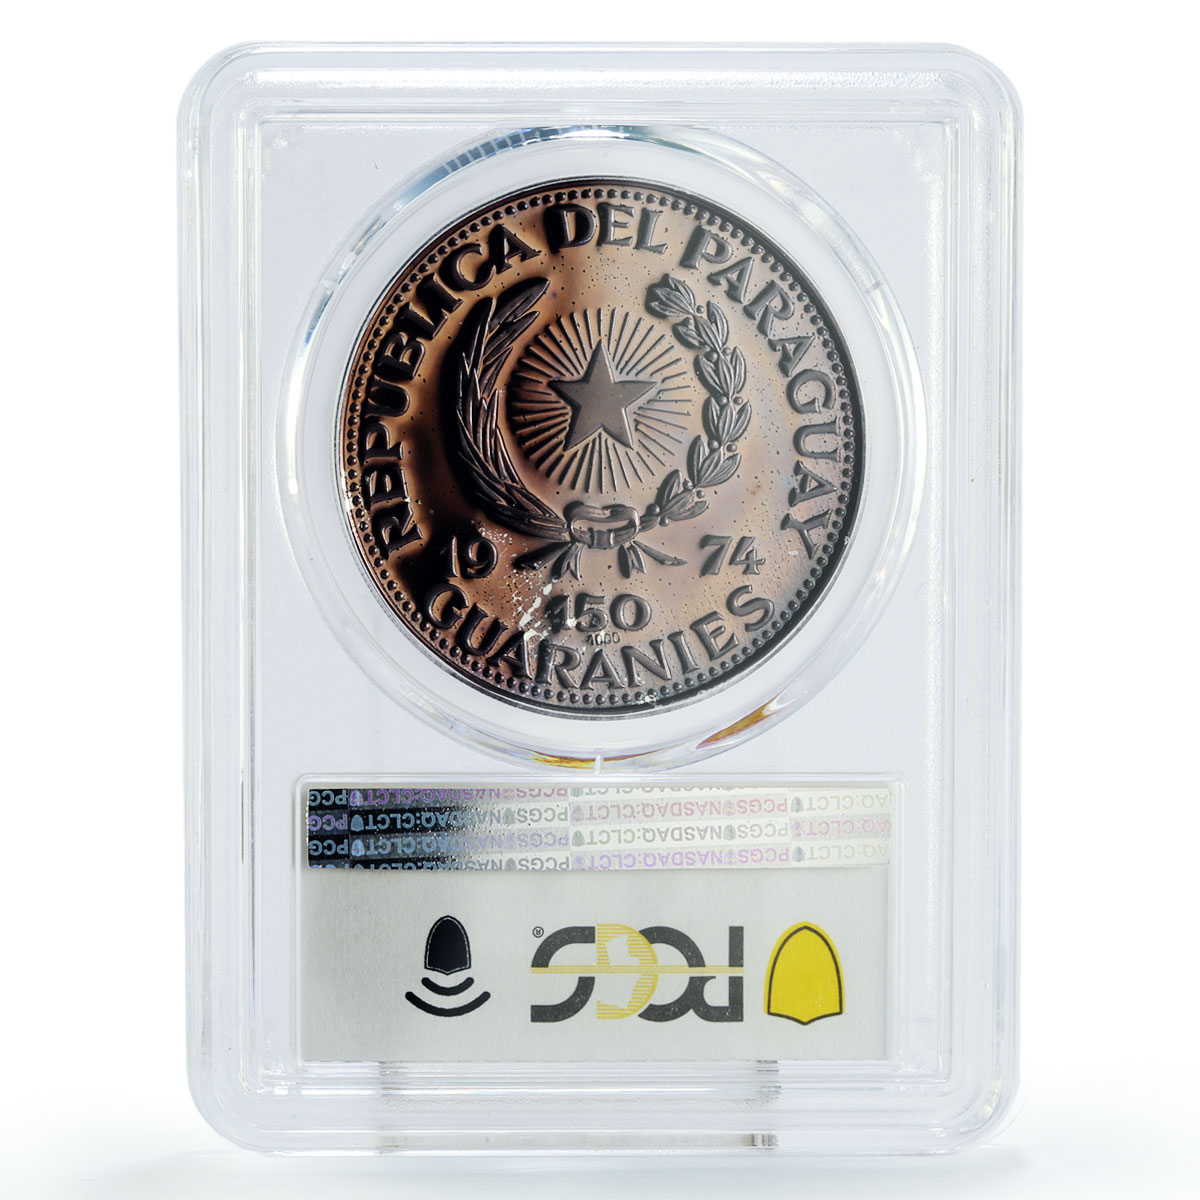 Paraguay 150 guaranies Vatican Pope Paul VI Religion PR66 PCGS silver coin 1974